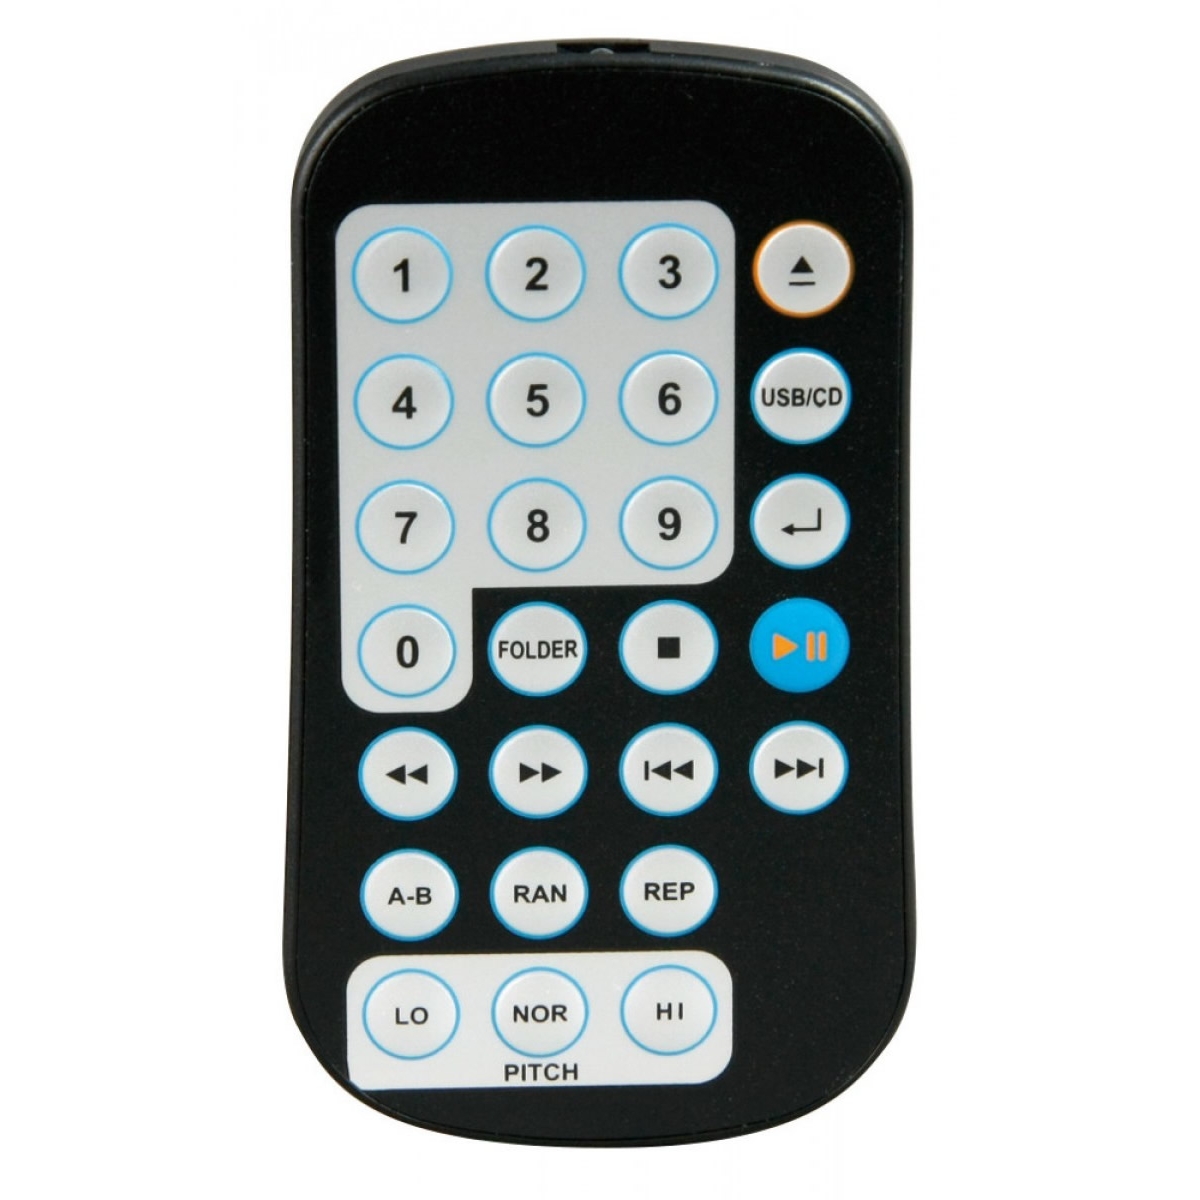 MiPro 2MD012 Remote Control for MiPro CDM-05, CDM-07 & CDM-08 CD Players